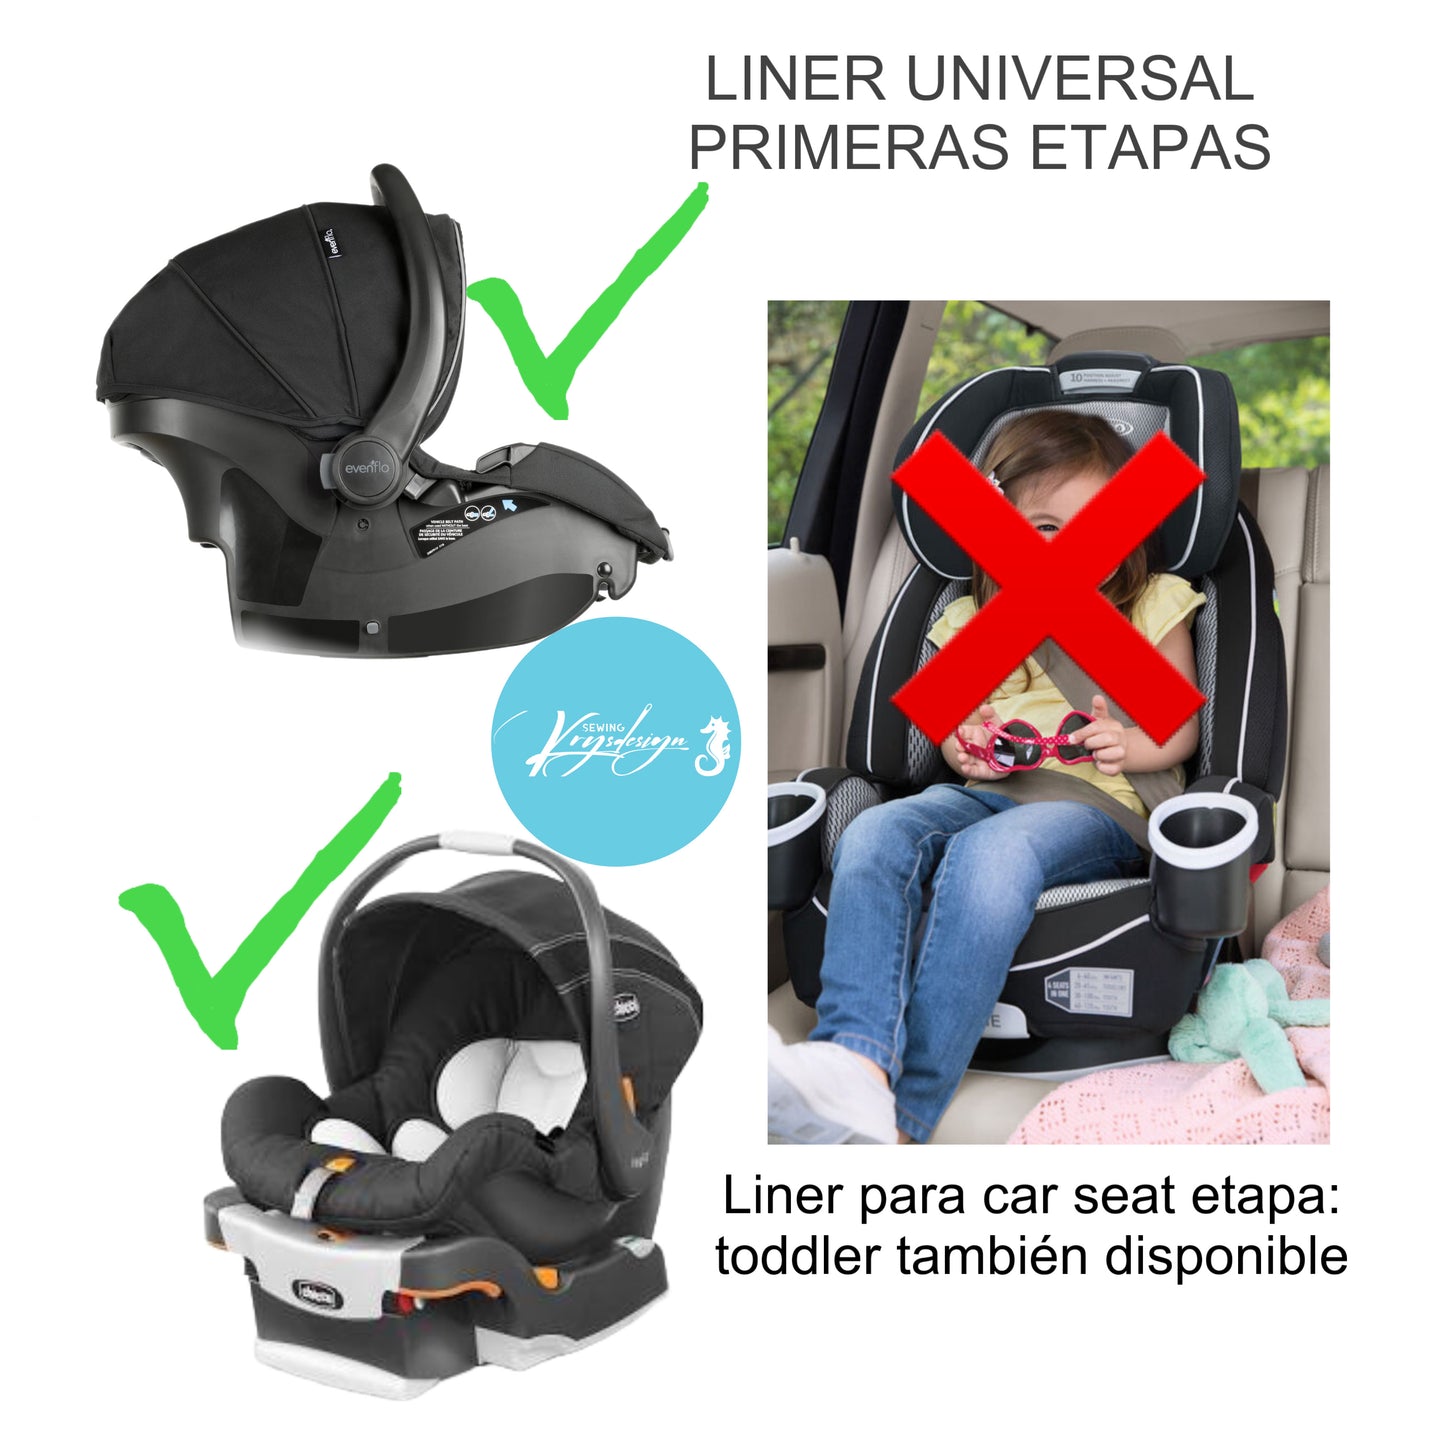 Liner interior para car seat